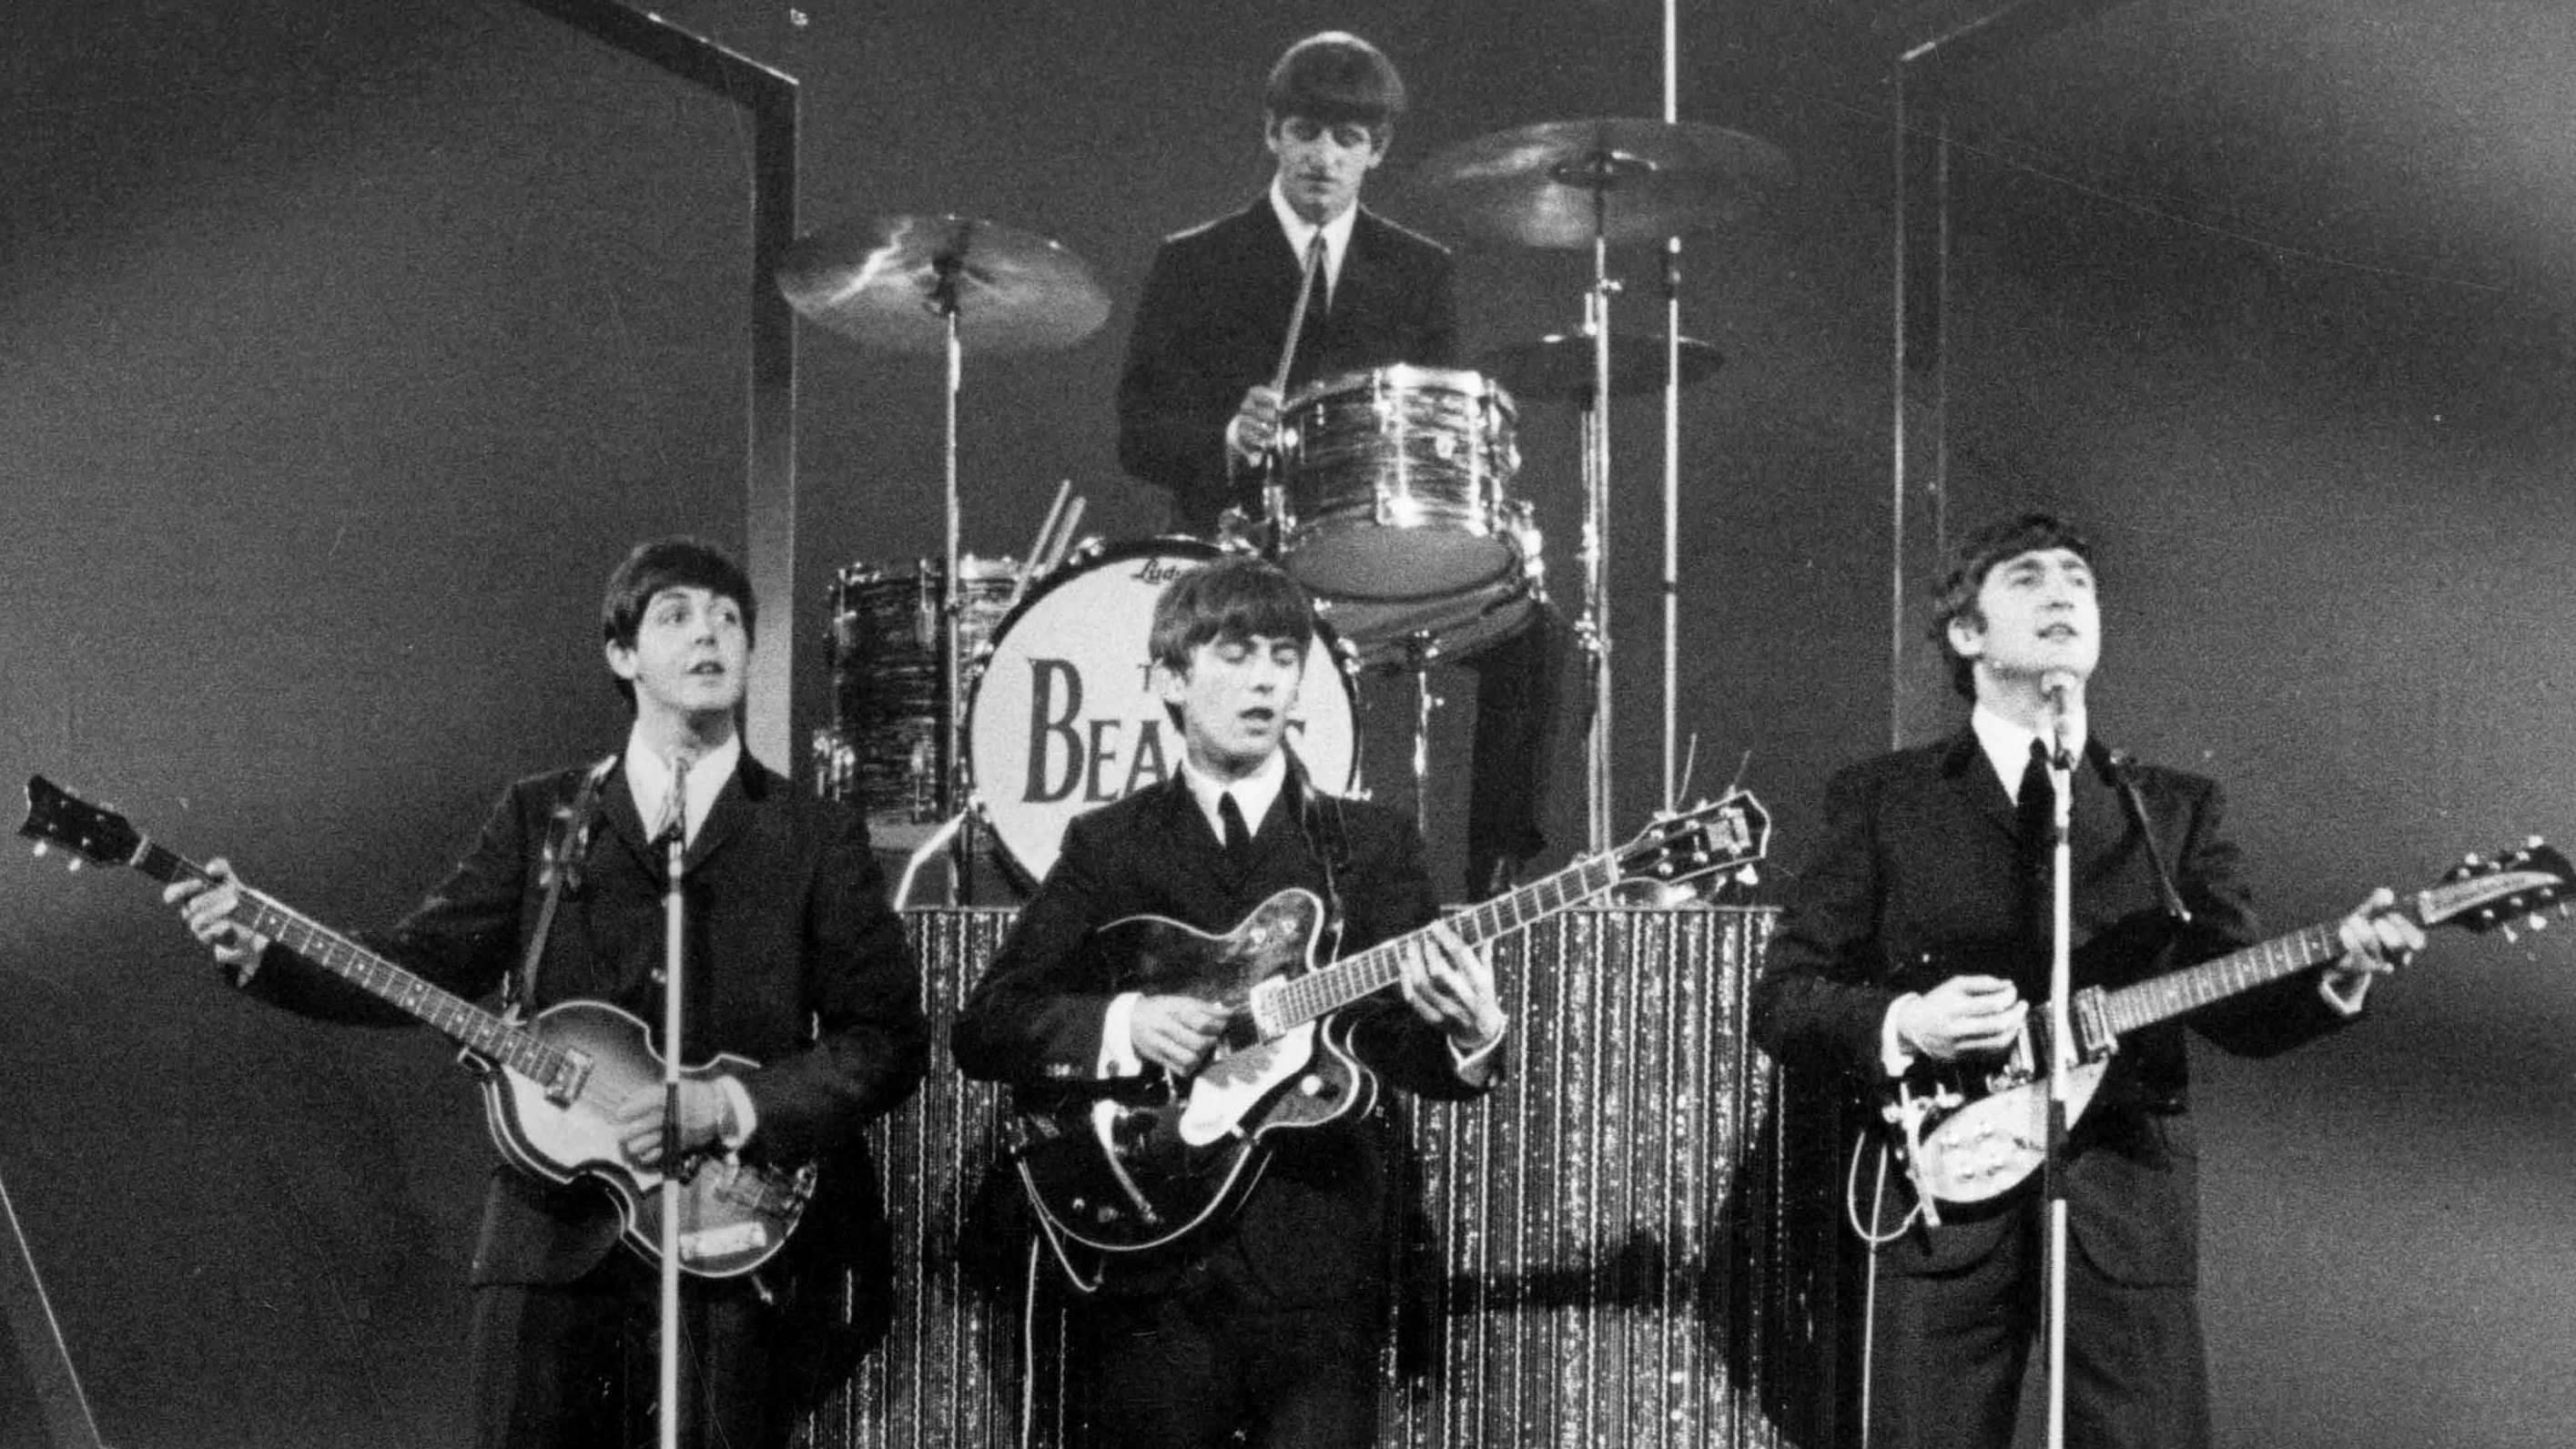 The Beatles on stage at the London Palladium.